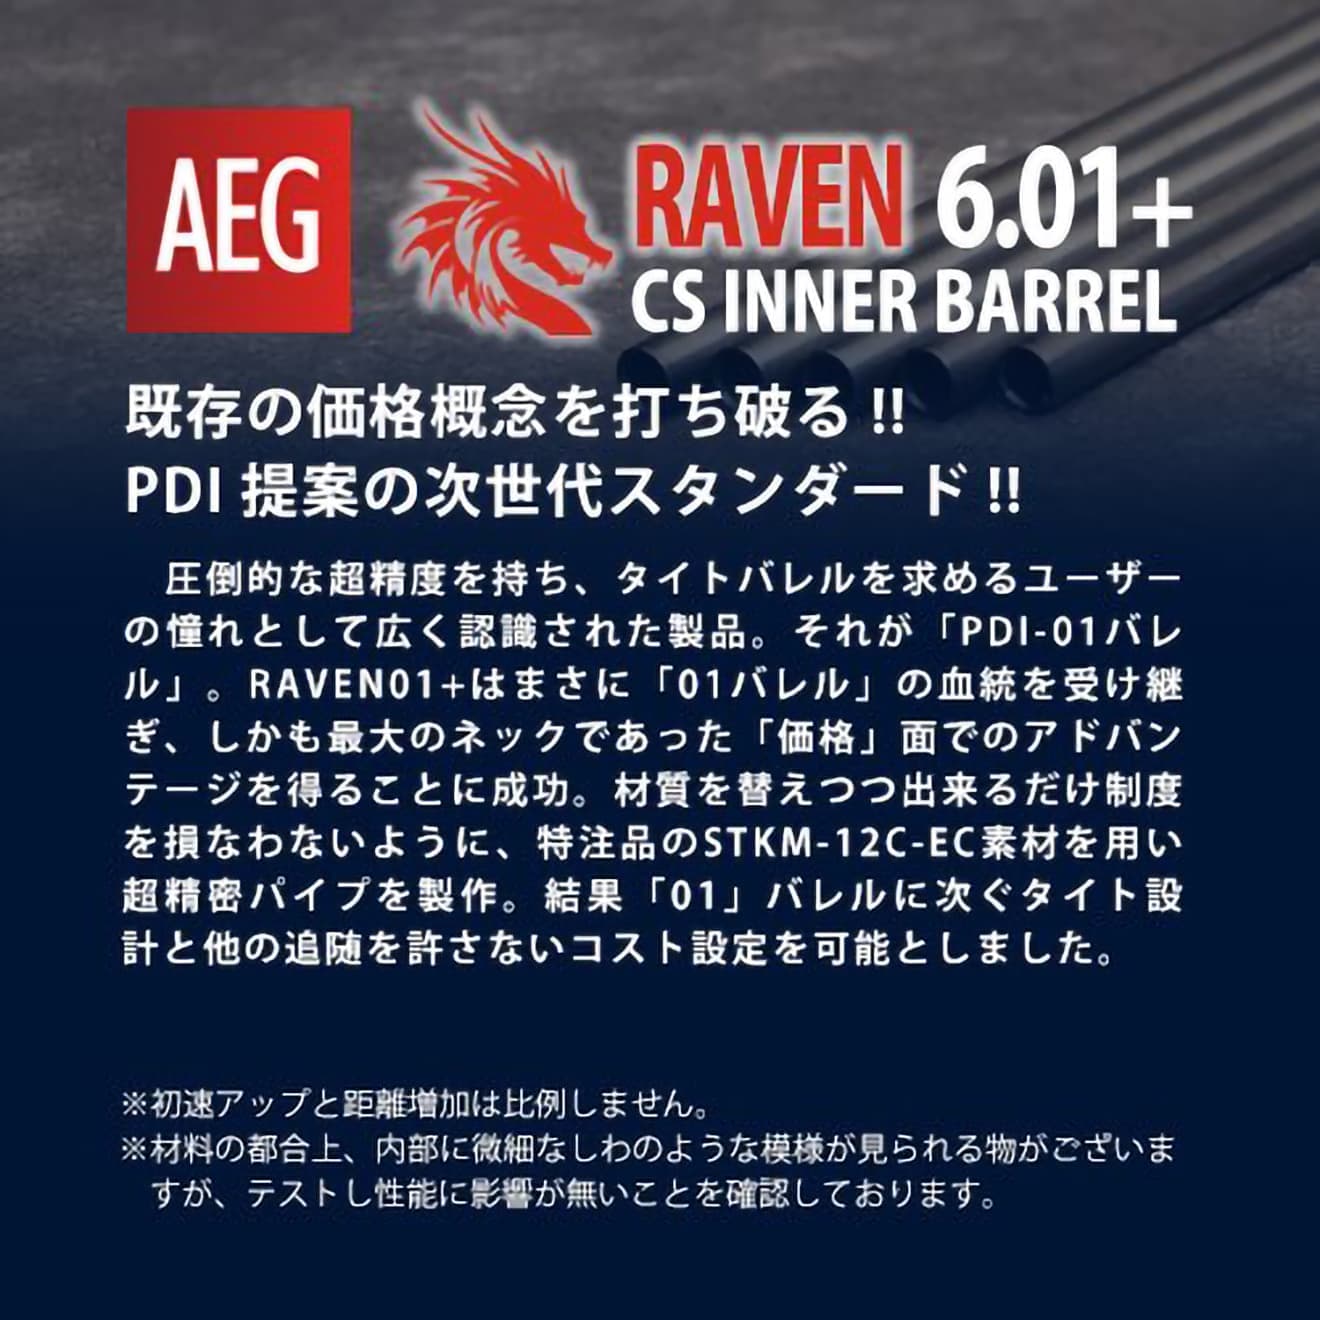 PDI RAVENシリーズ 01+ AEG 精密インナーバレル(6.01±0.007) [長さ：229mm / 247mm / 275mm / 285mm / 303mm / 375mm / 420mm / 430mm / 450mm / 455mm / 469mm / 487mm / 495mm / 520mm]